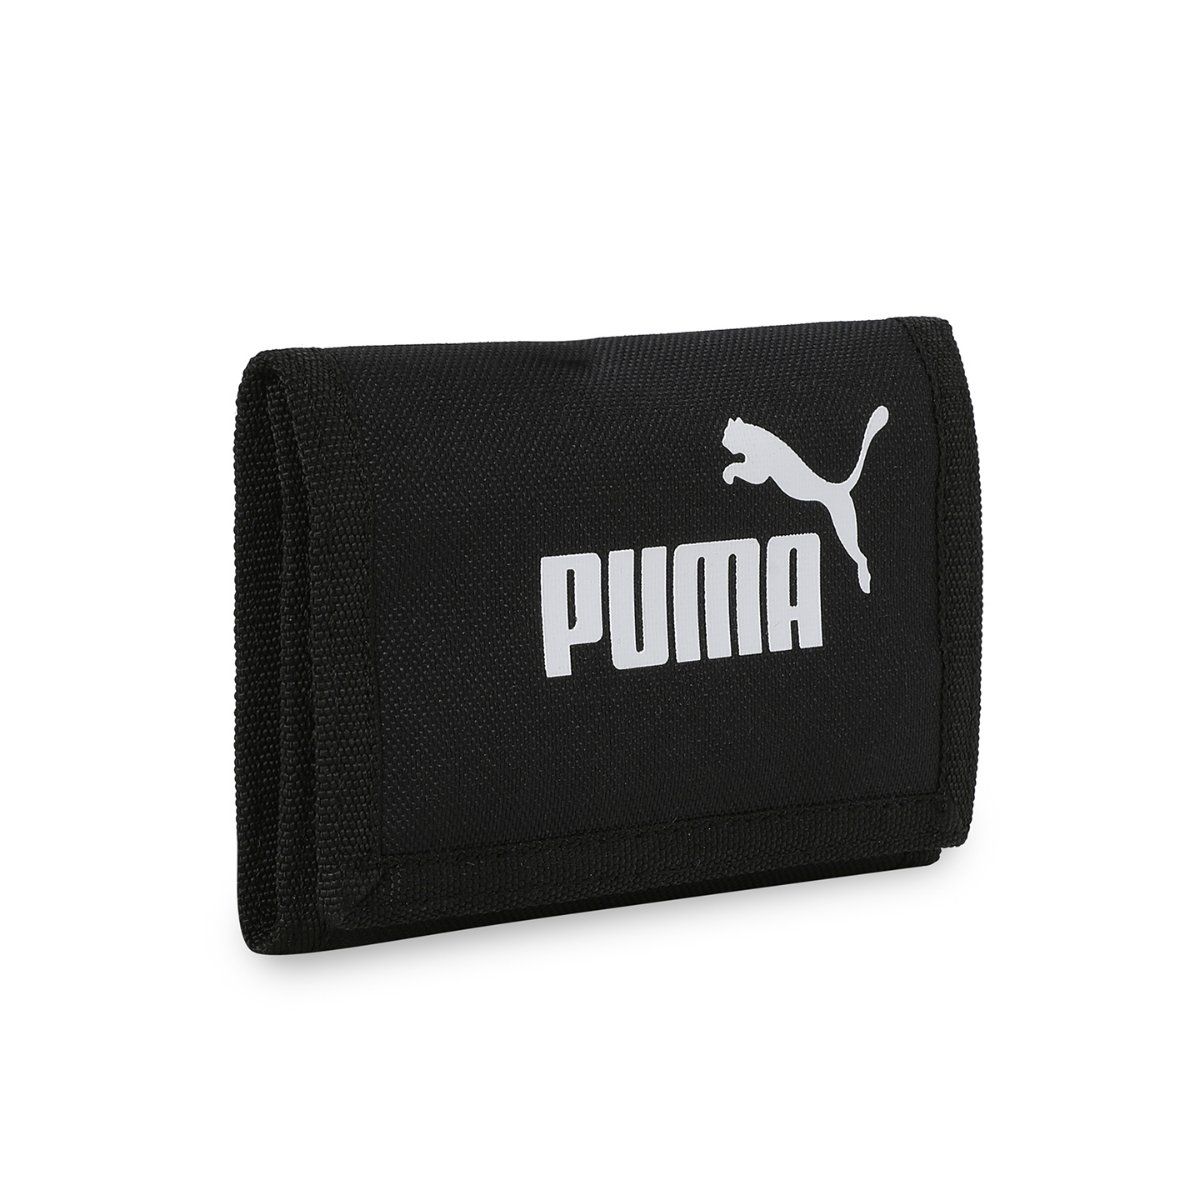 Buy PUMA Puma Men Black & Brown Geometric Two Fold Wallet at Redfynd